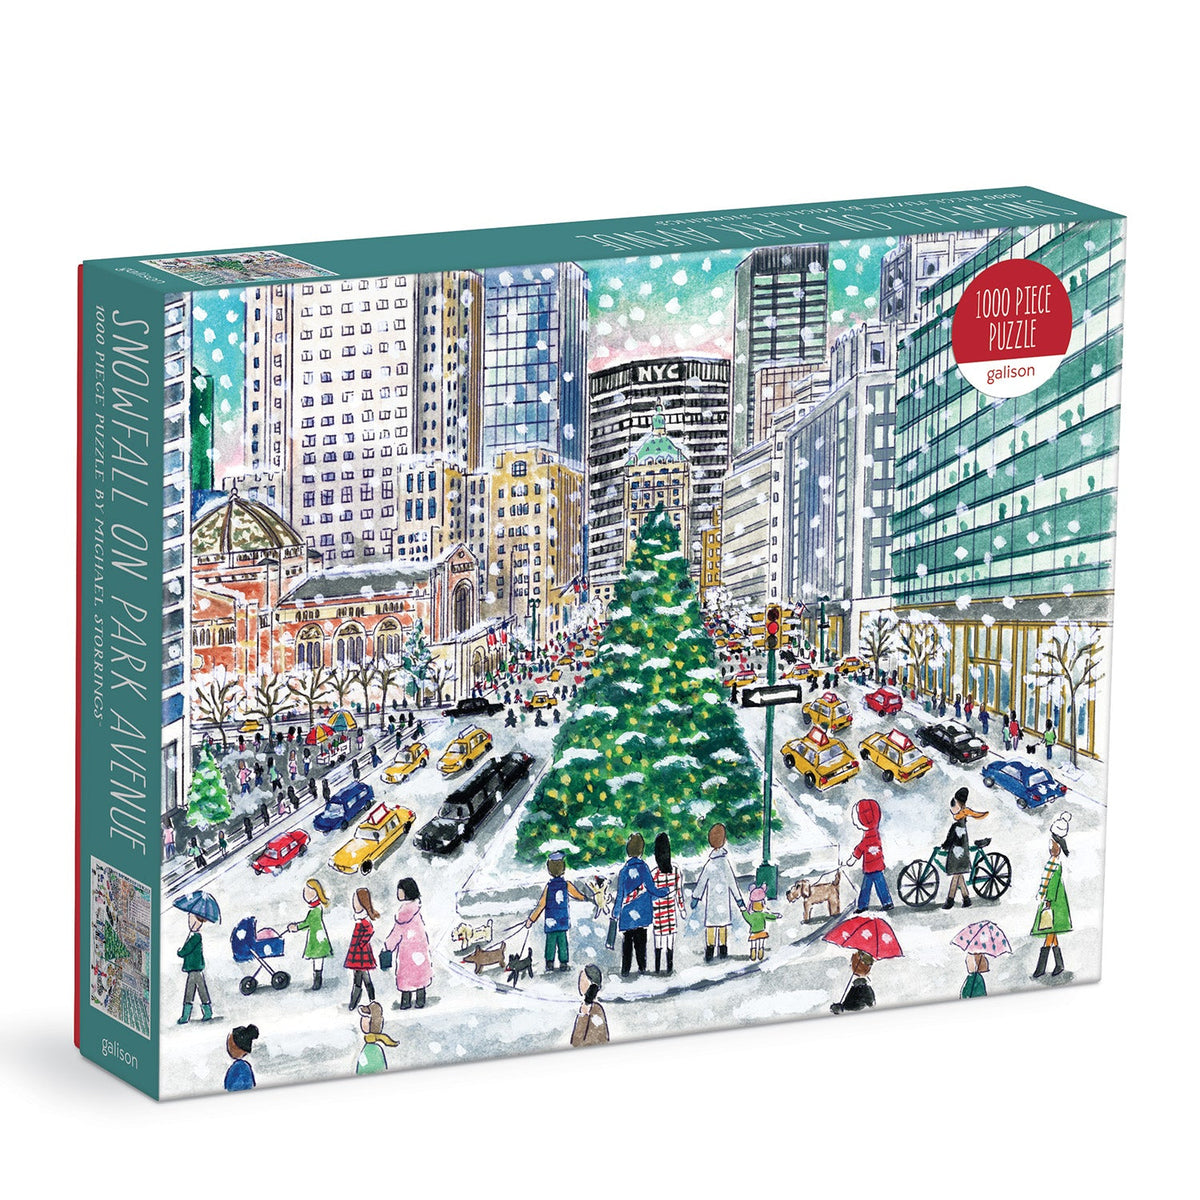 Michael Storrings Snowfall on Park Avenue 1000 Piece Puzzle Galison 